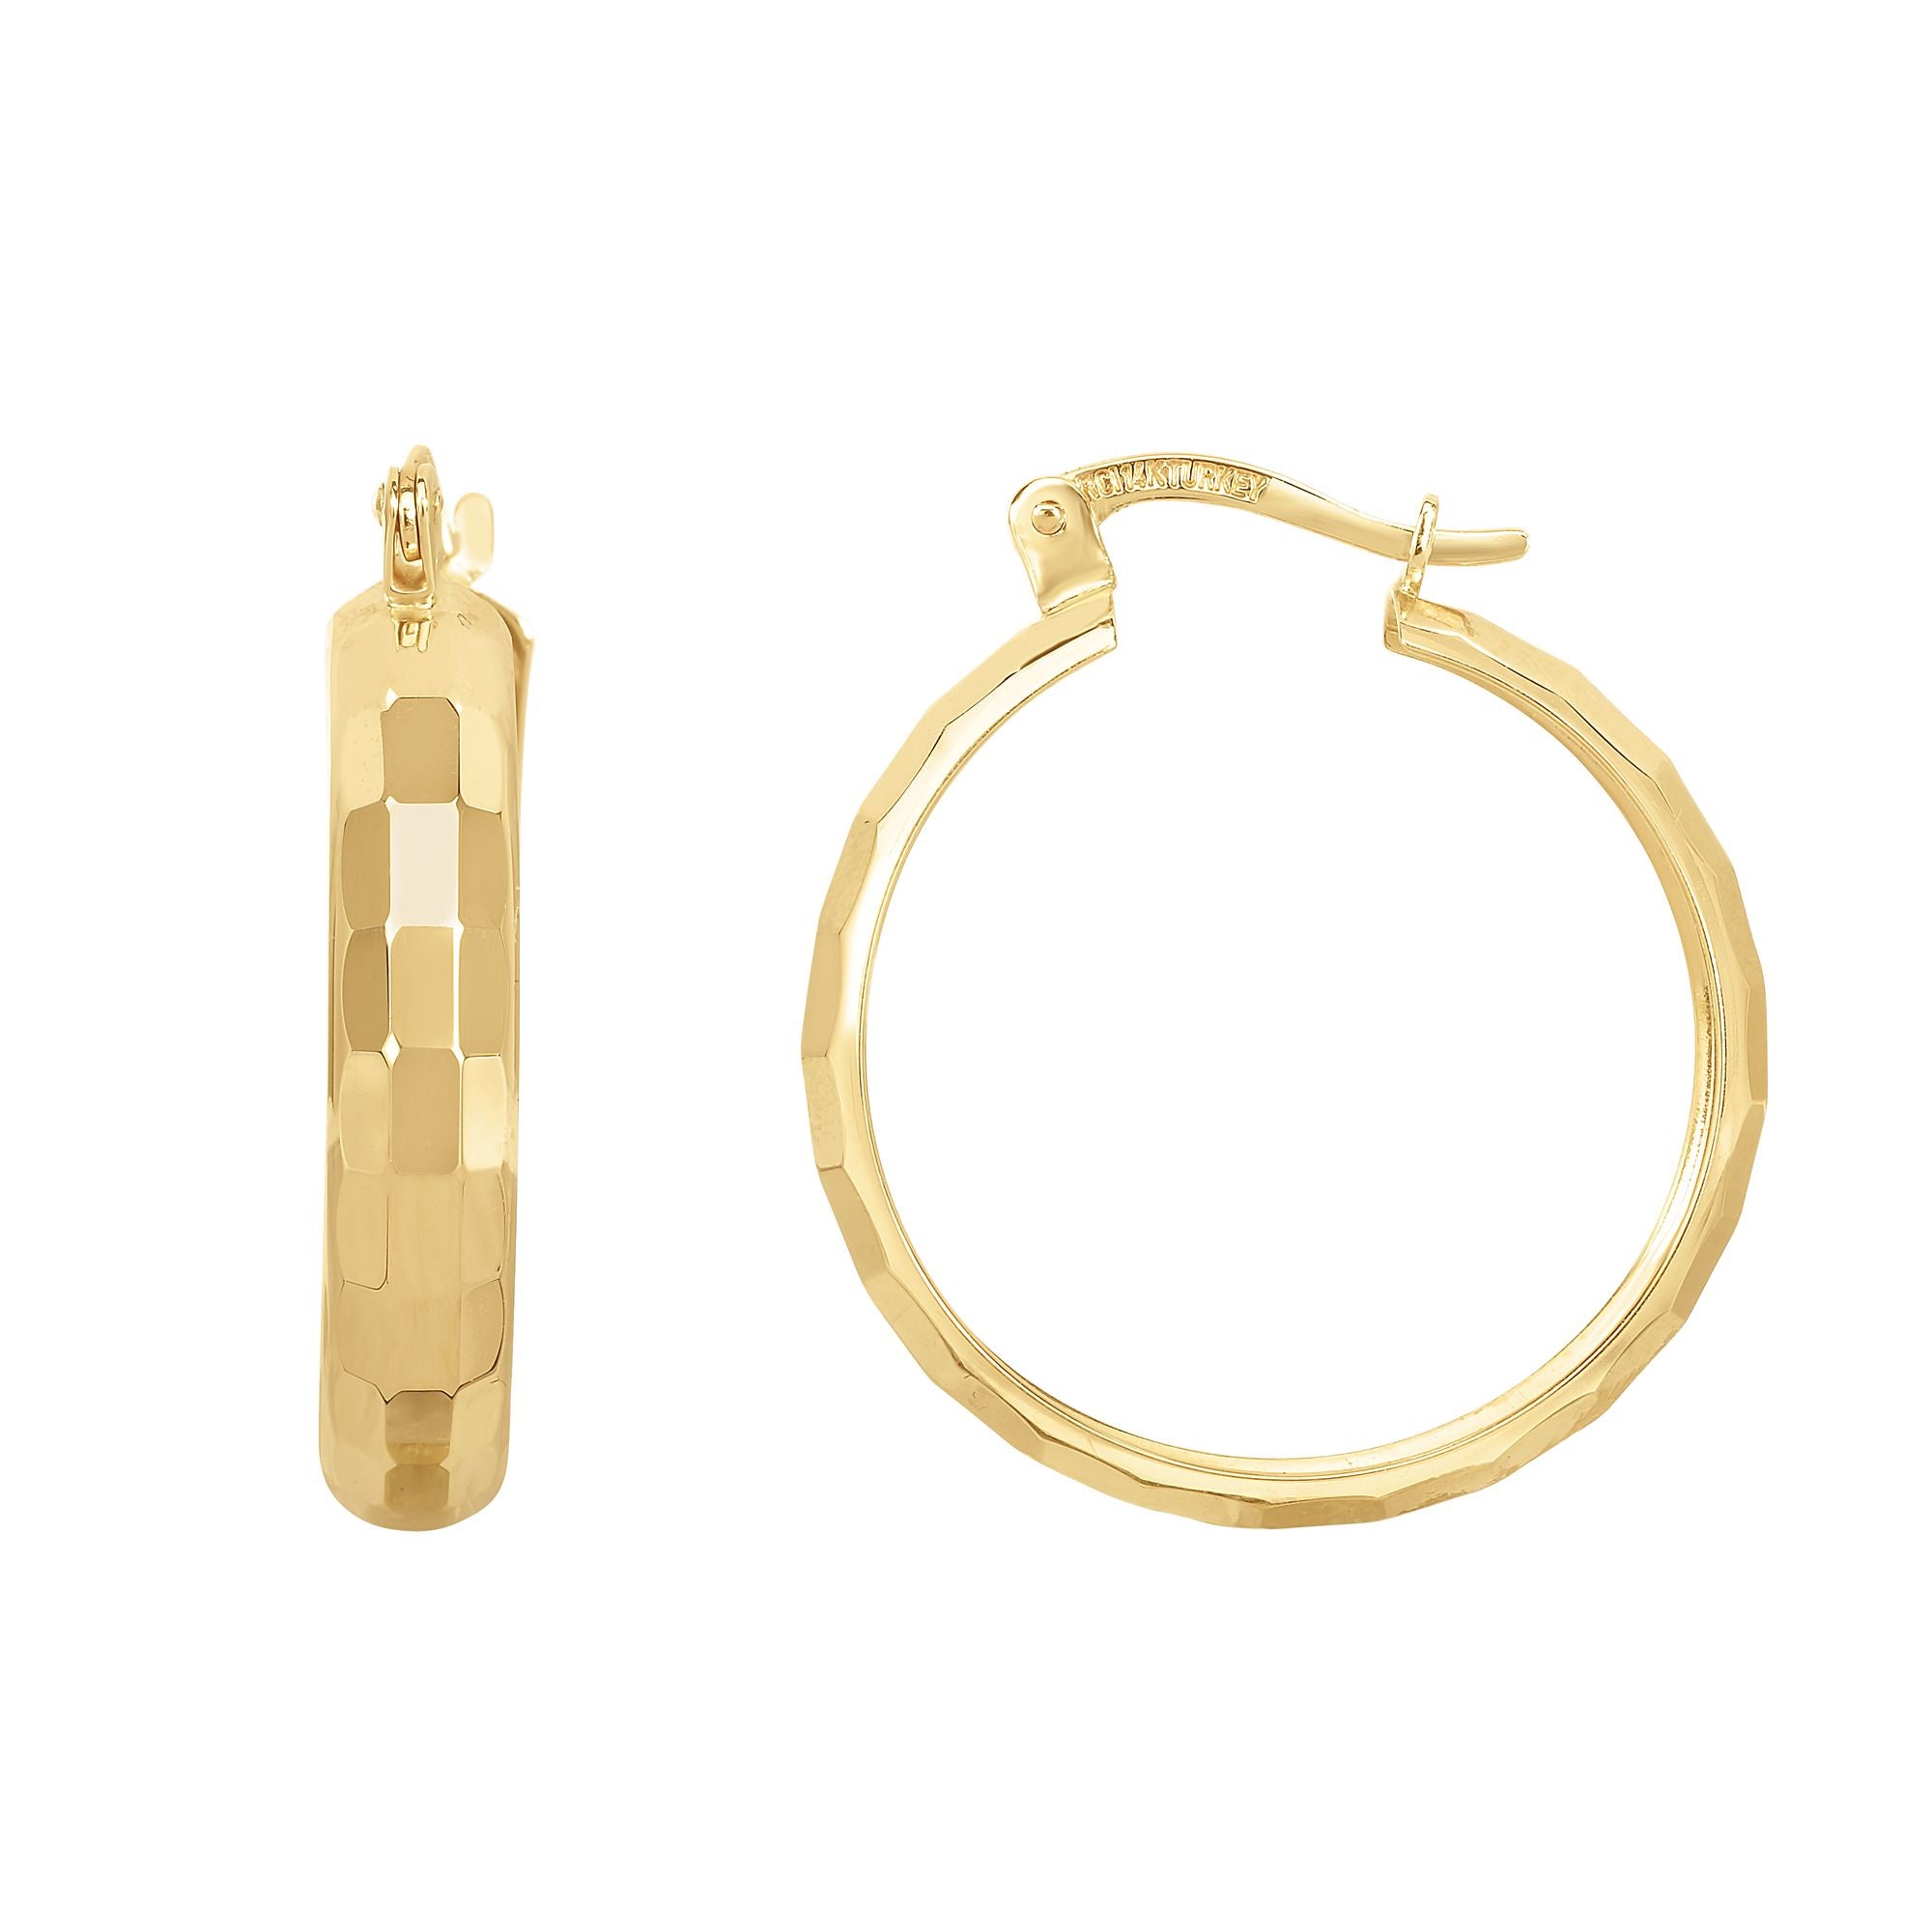 14K Gold Reflective Rectangular Hoop Earrings, Diameter 22mm